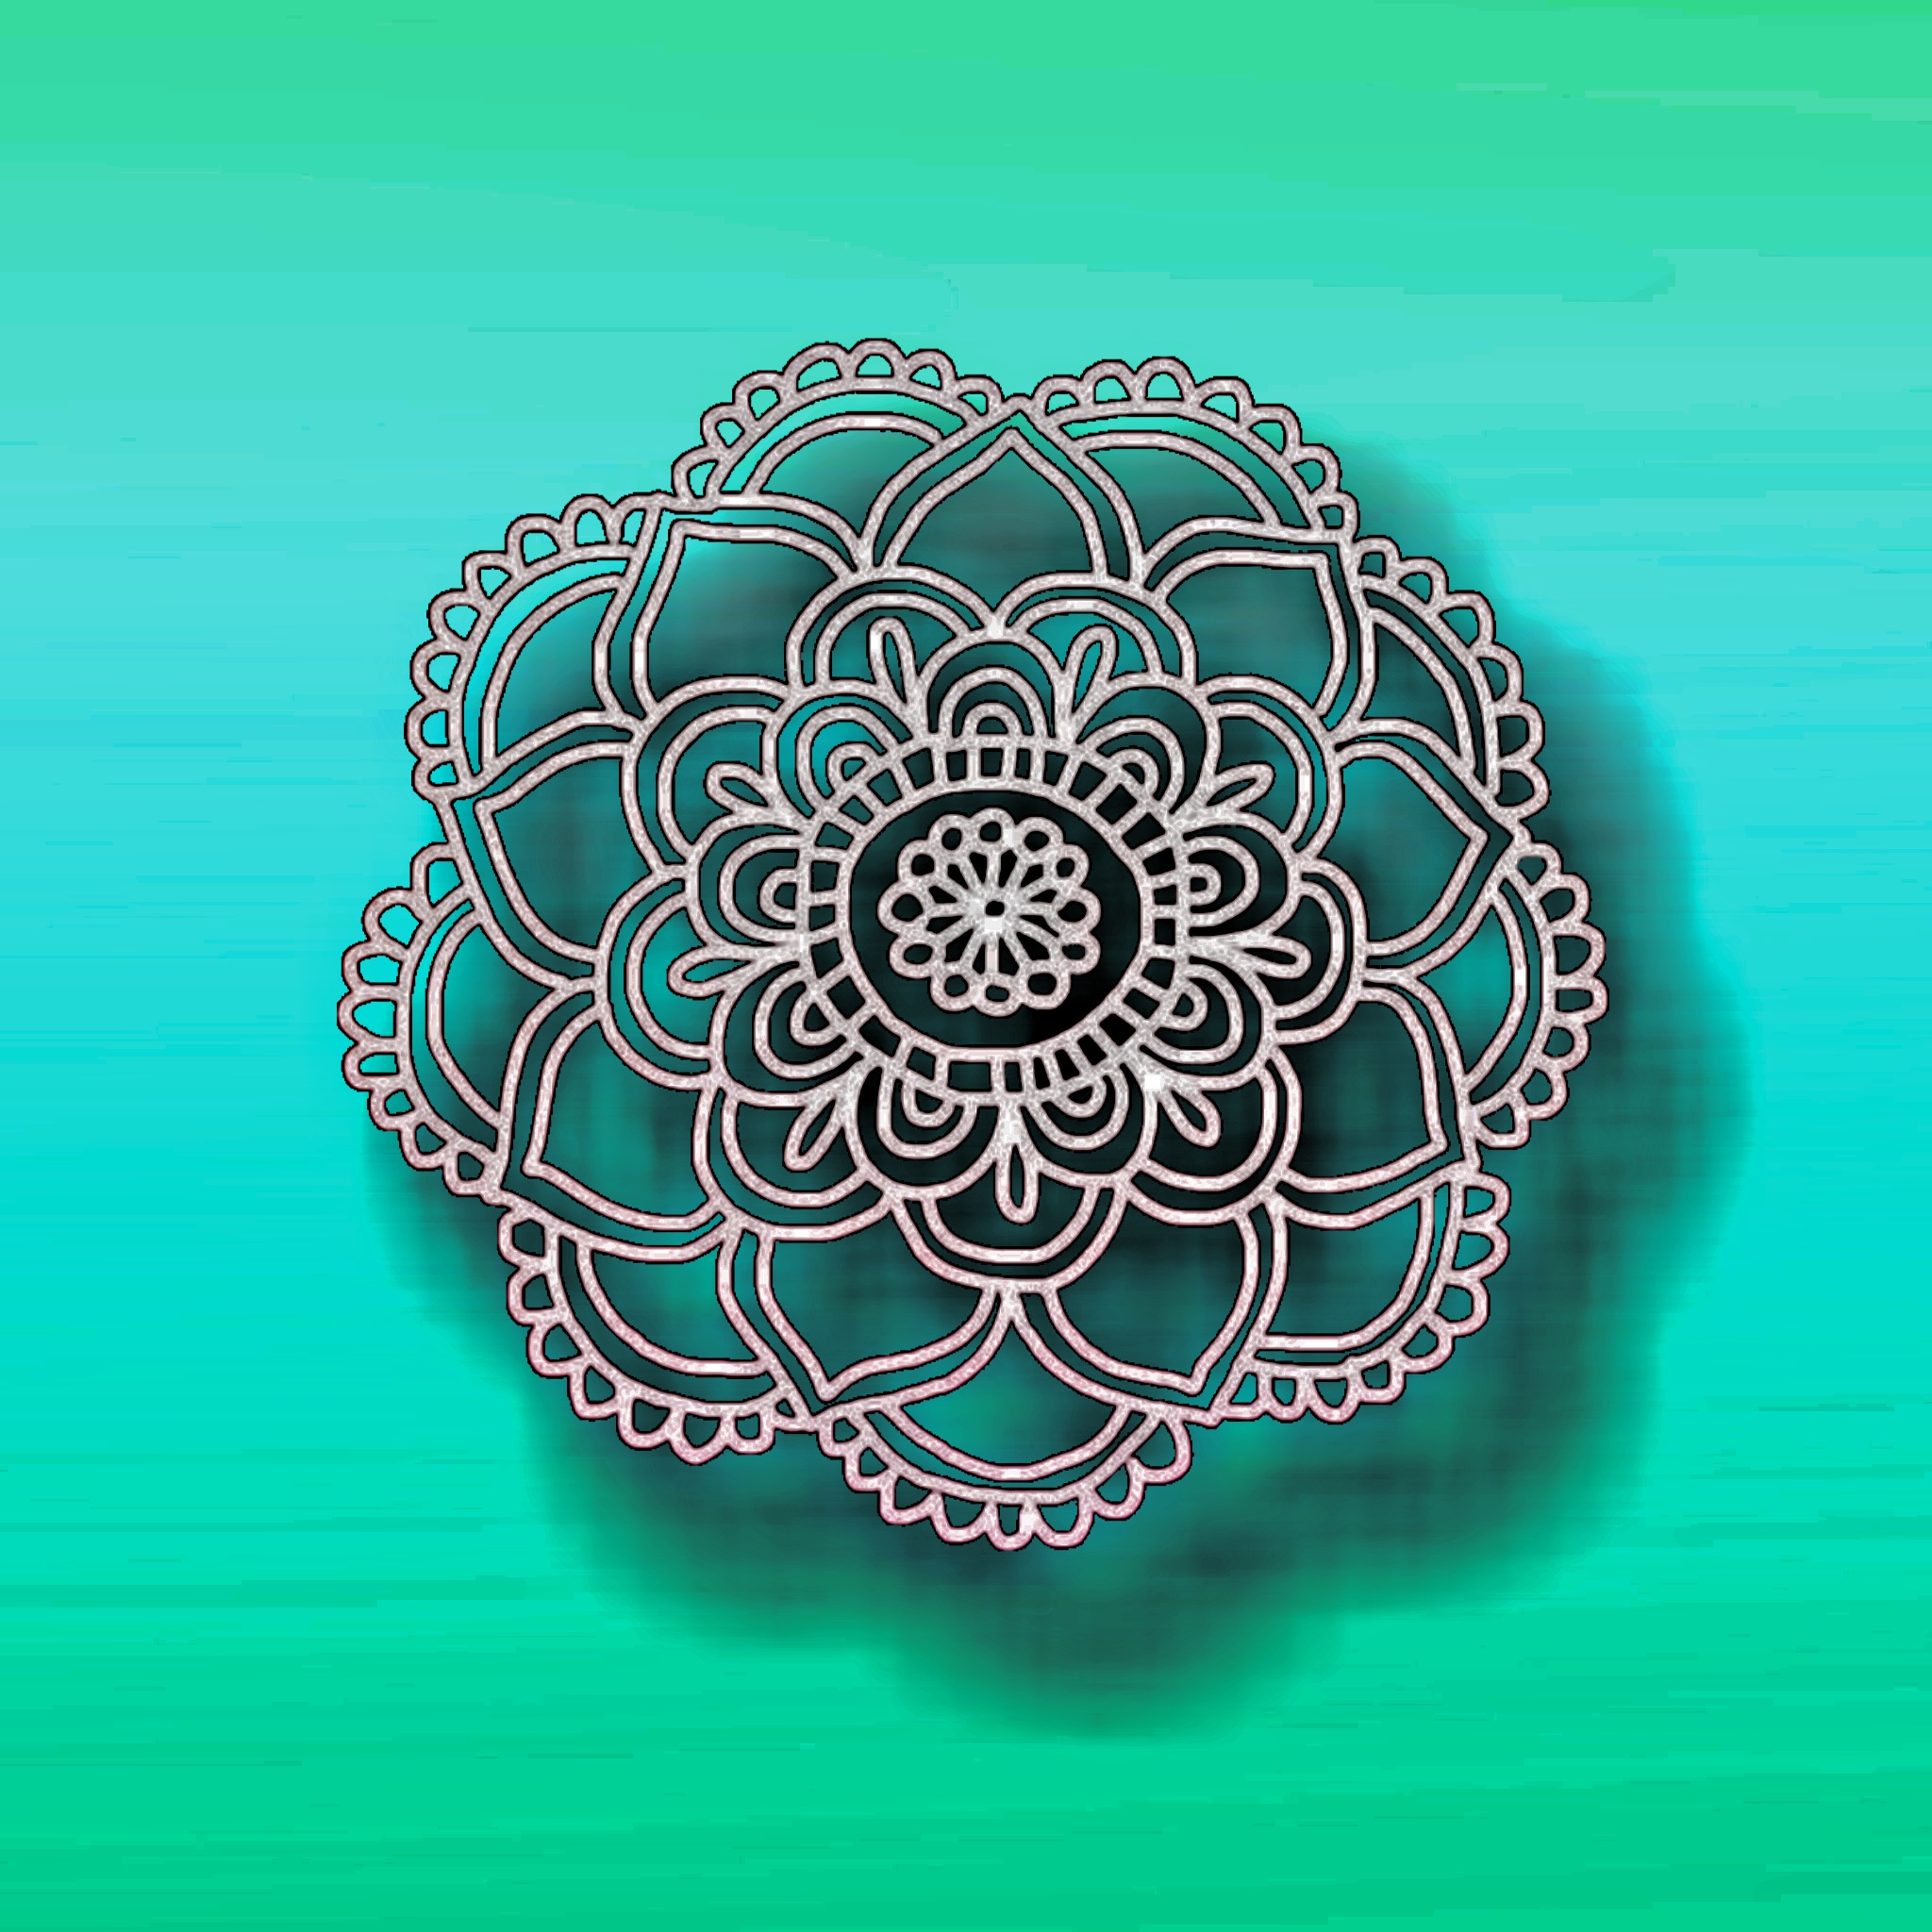 Mandala art design